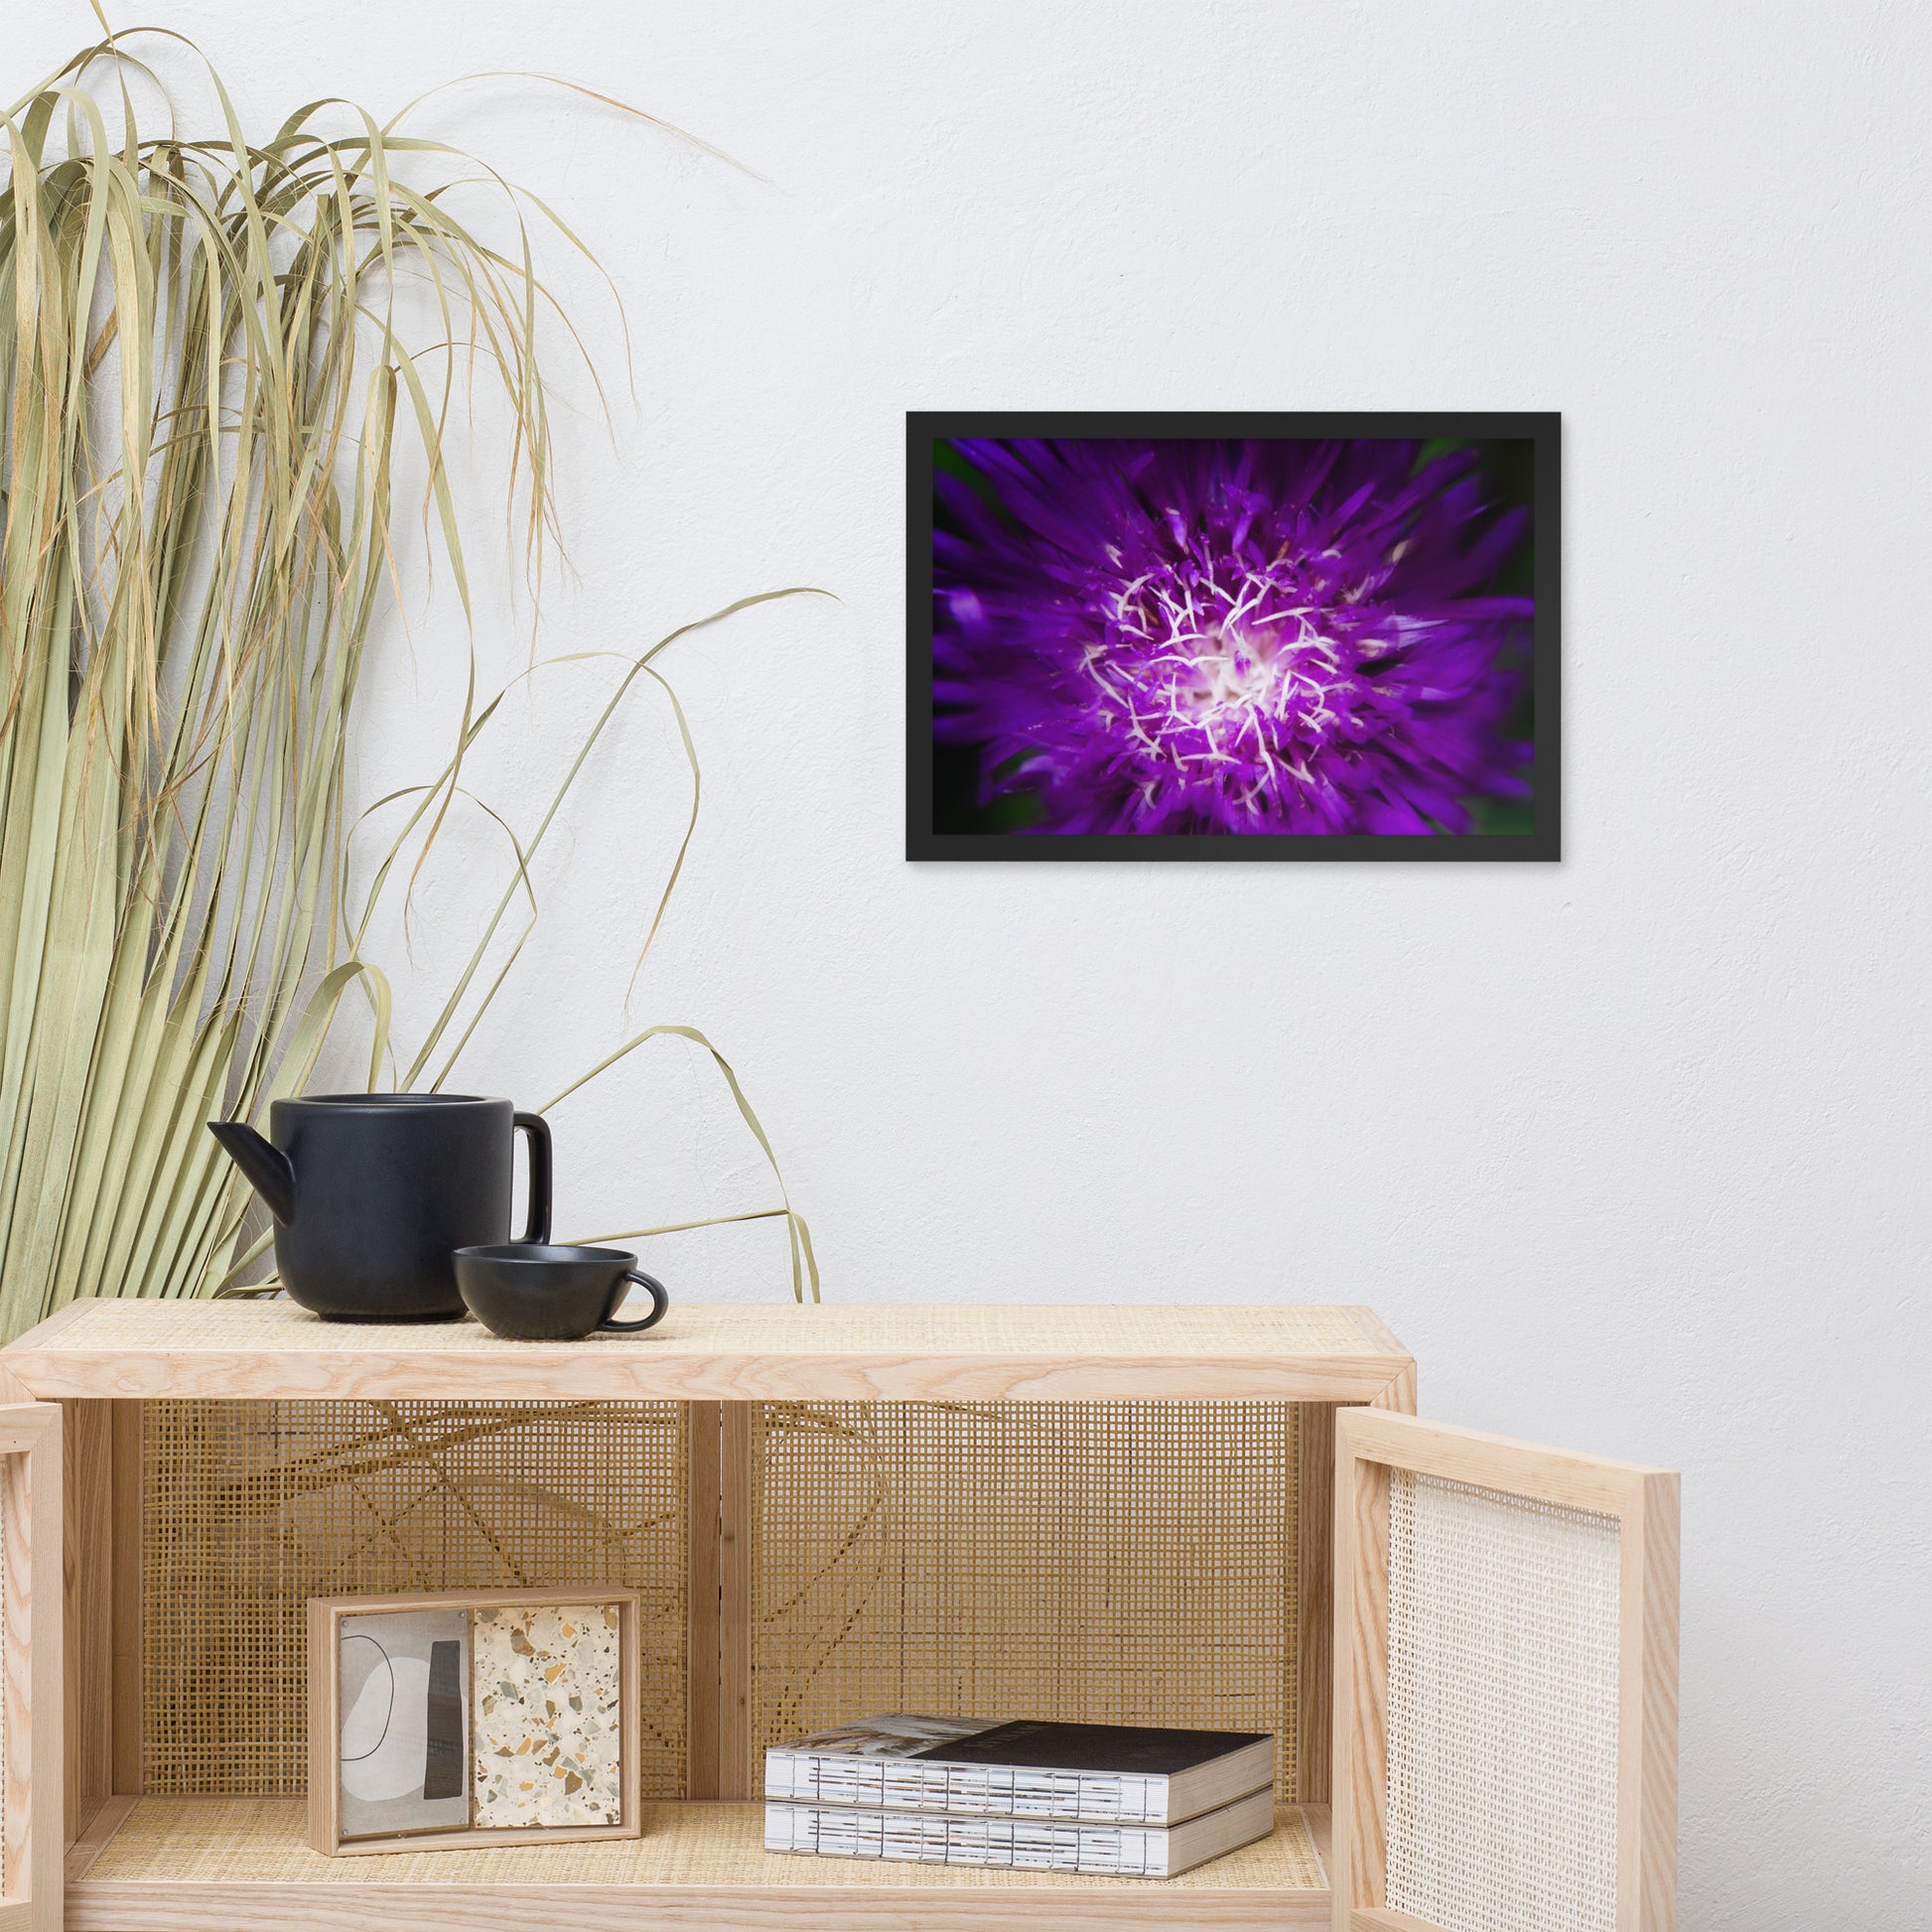 Minimalist Wall Decor For Living Room: Purple Abstract Flower - Botanical / Floral / Flora / Flowers / Nature Photograph Framed Wall Art Print - Artwork - Wall Decor